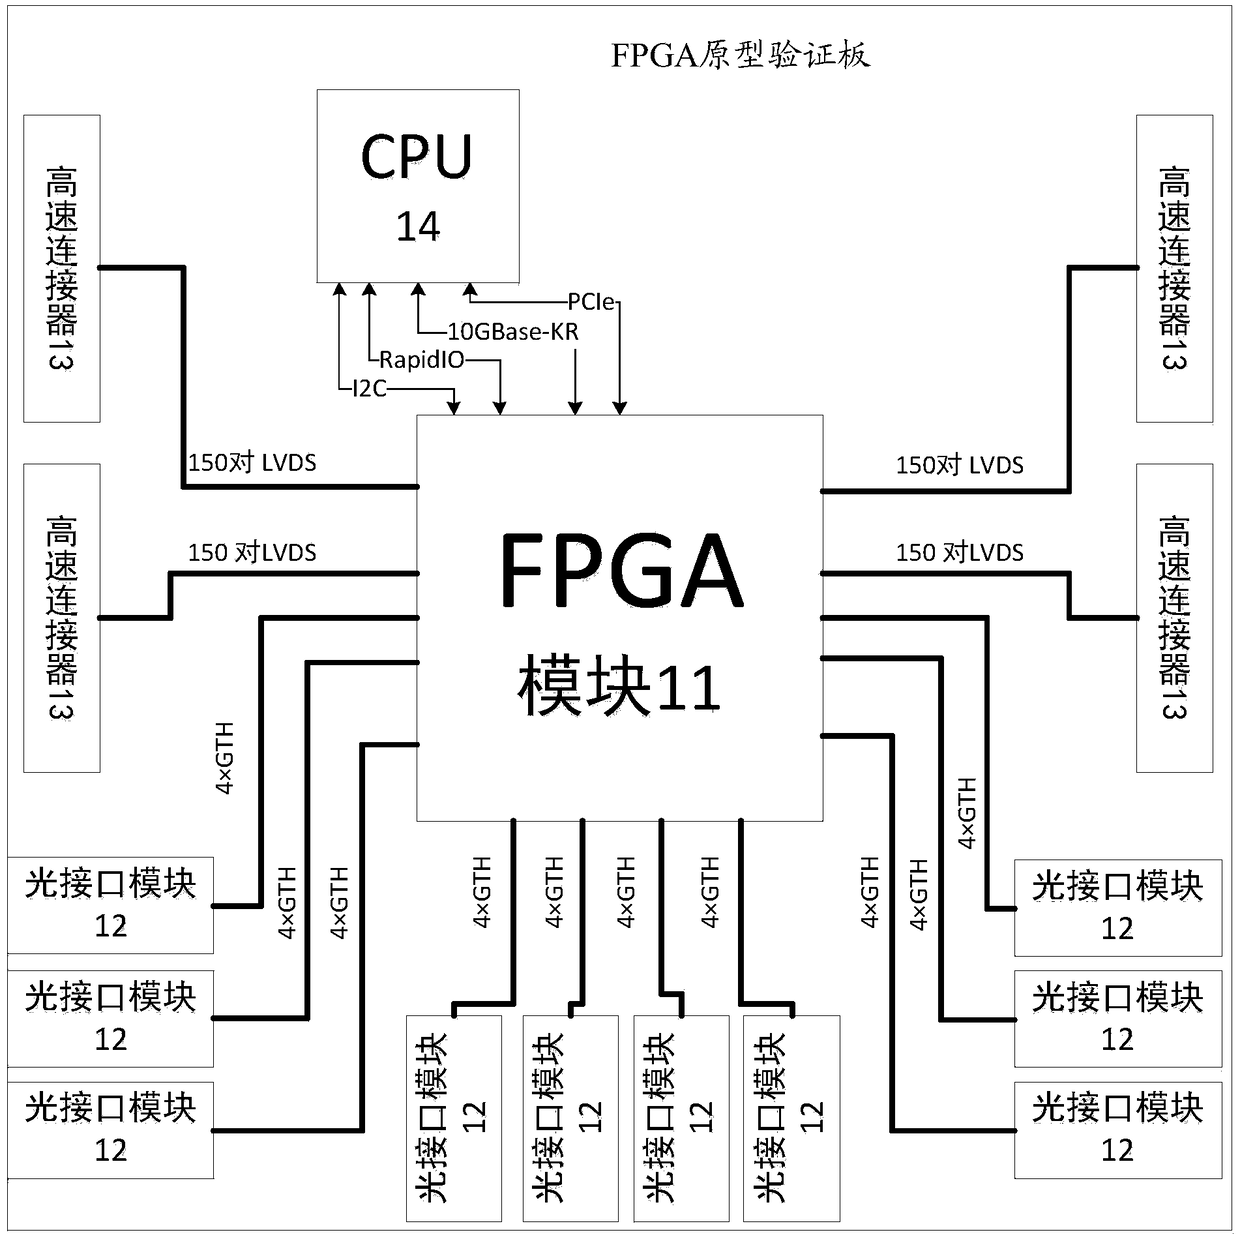 FPGA prototype verification system